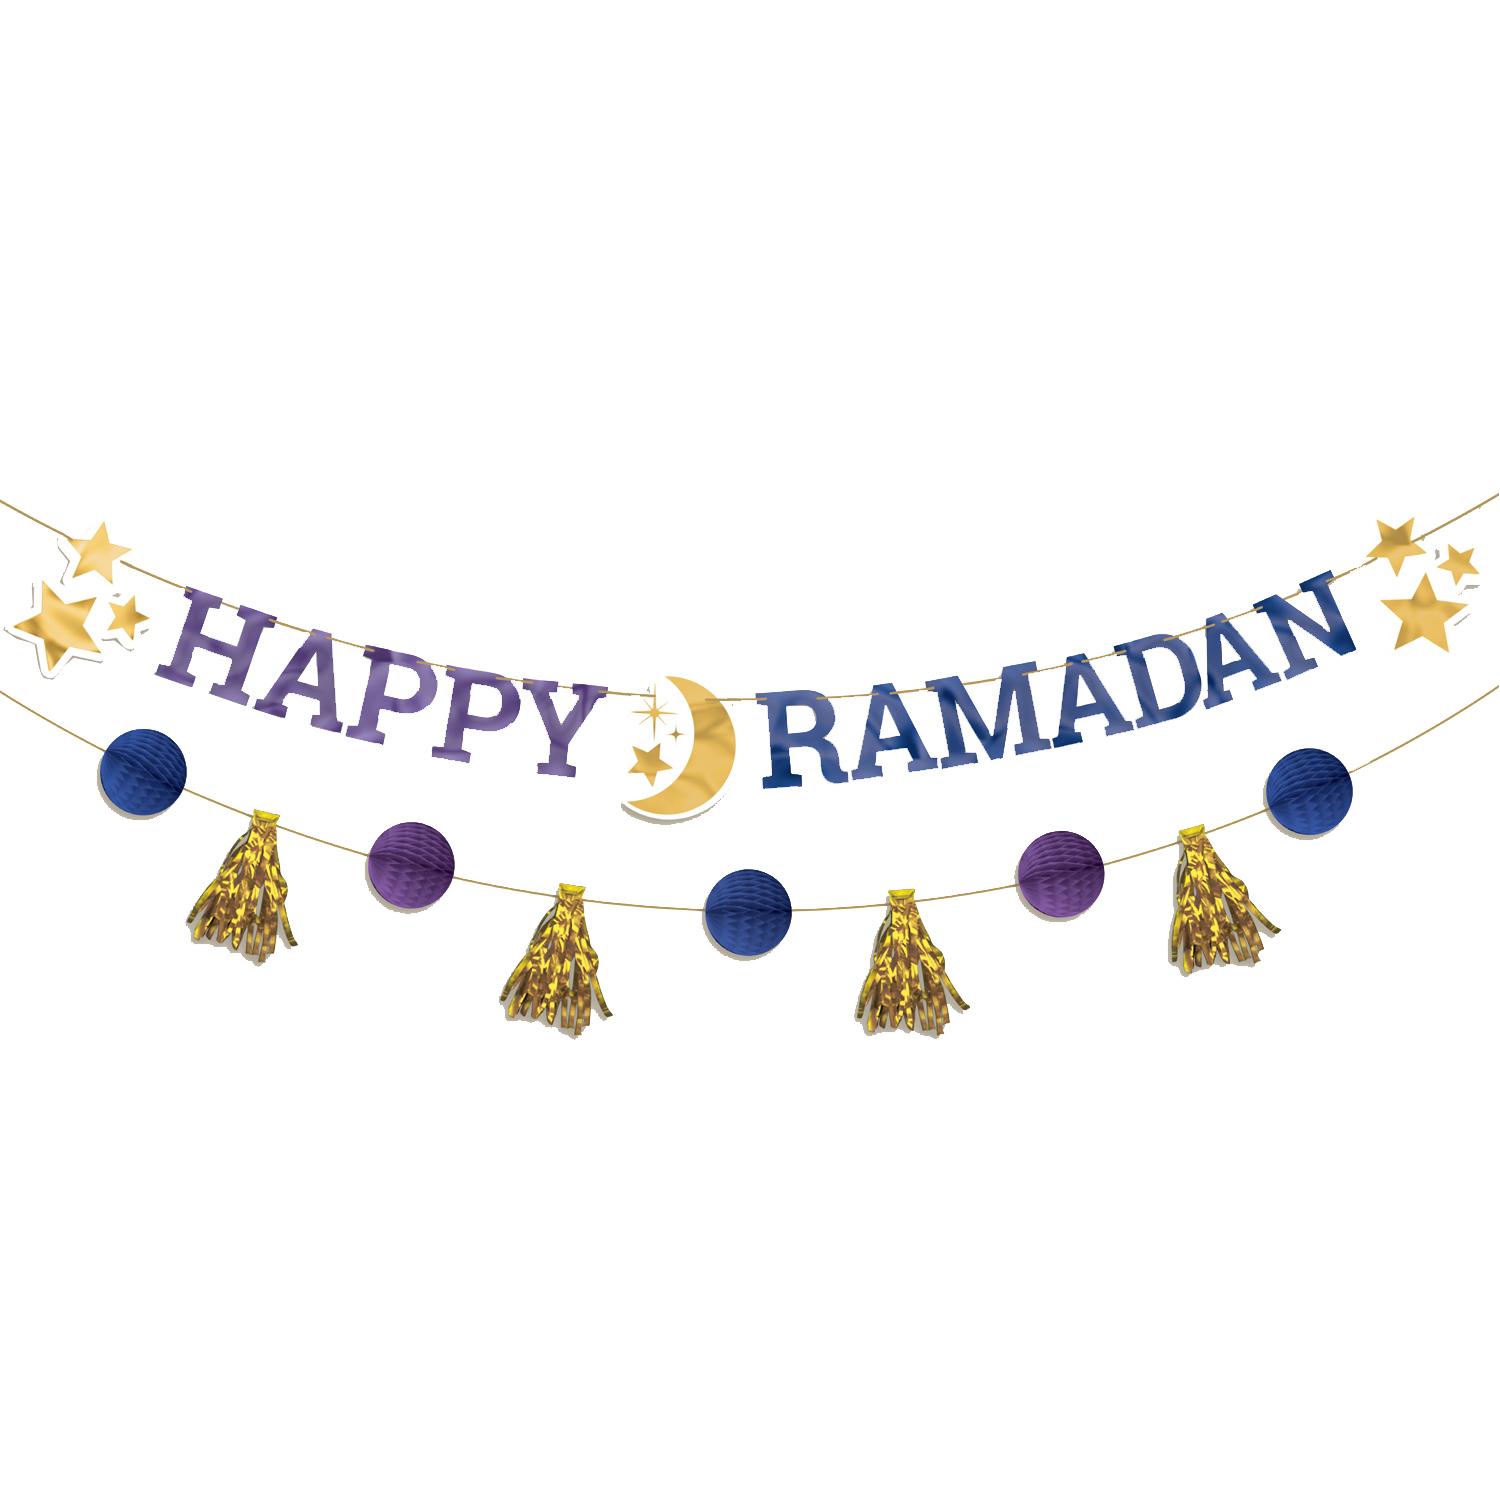 Happy Ramadan Letter Banner Kit Decorations - Party Centre